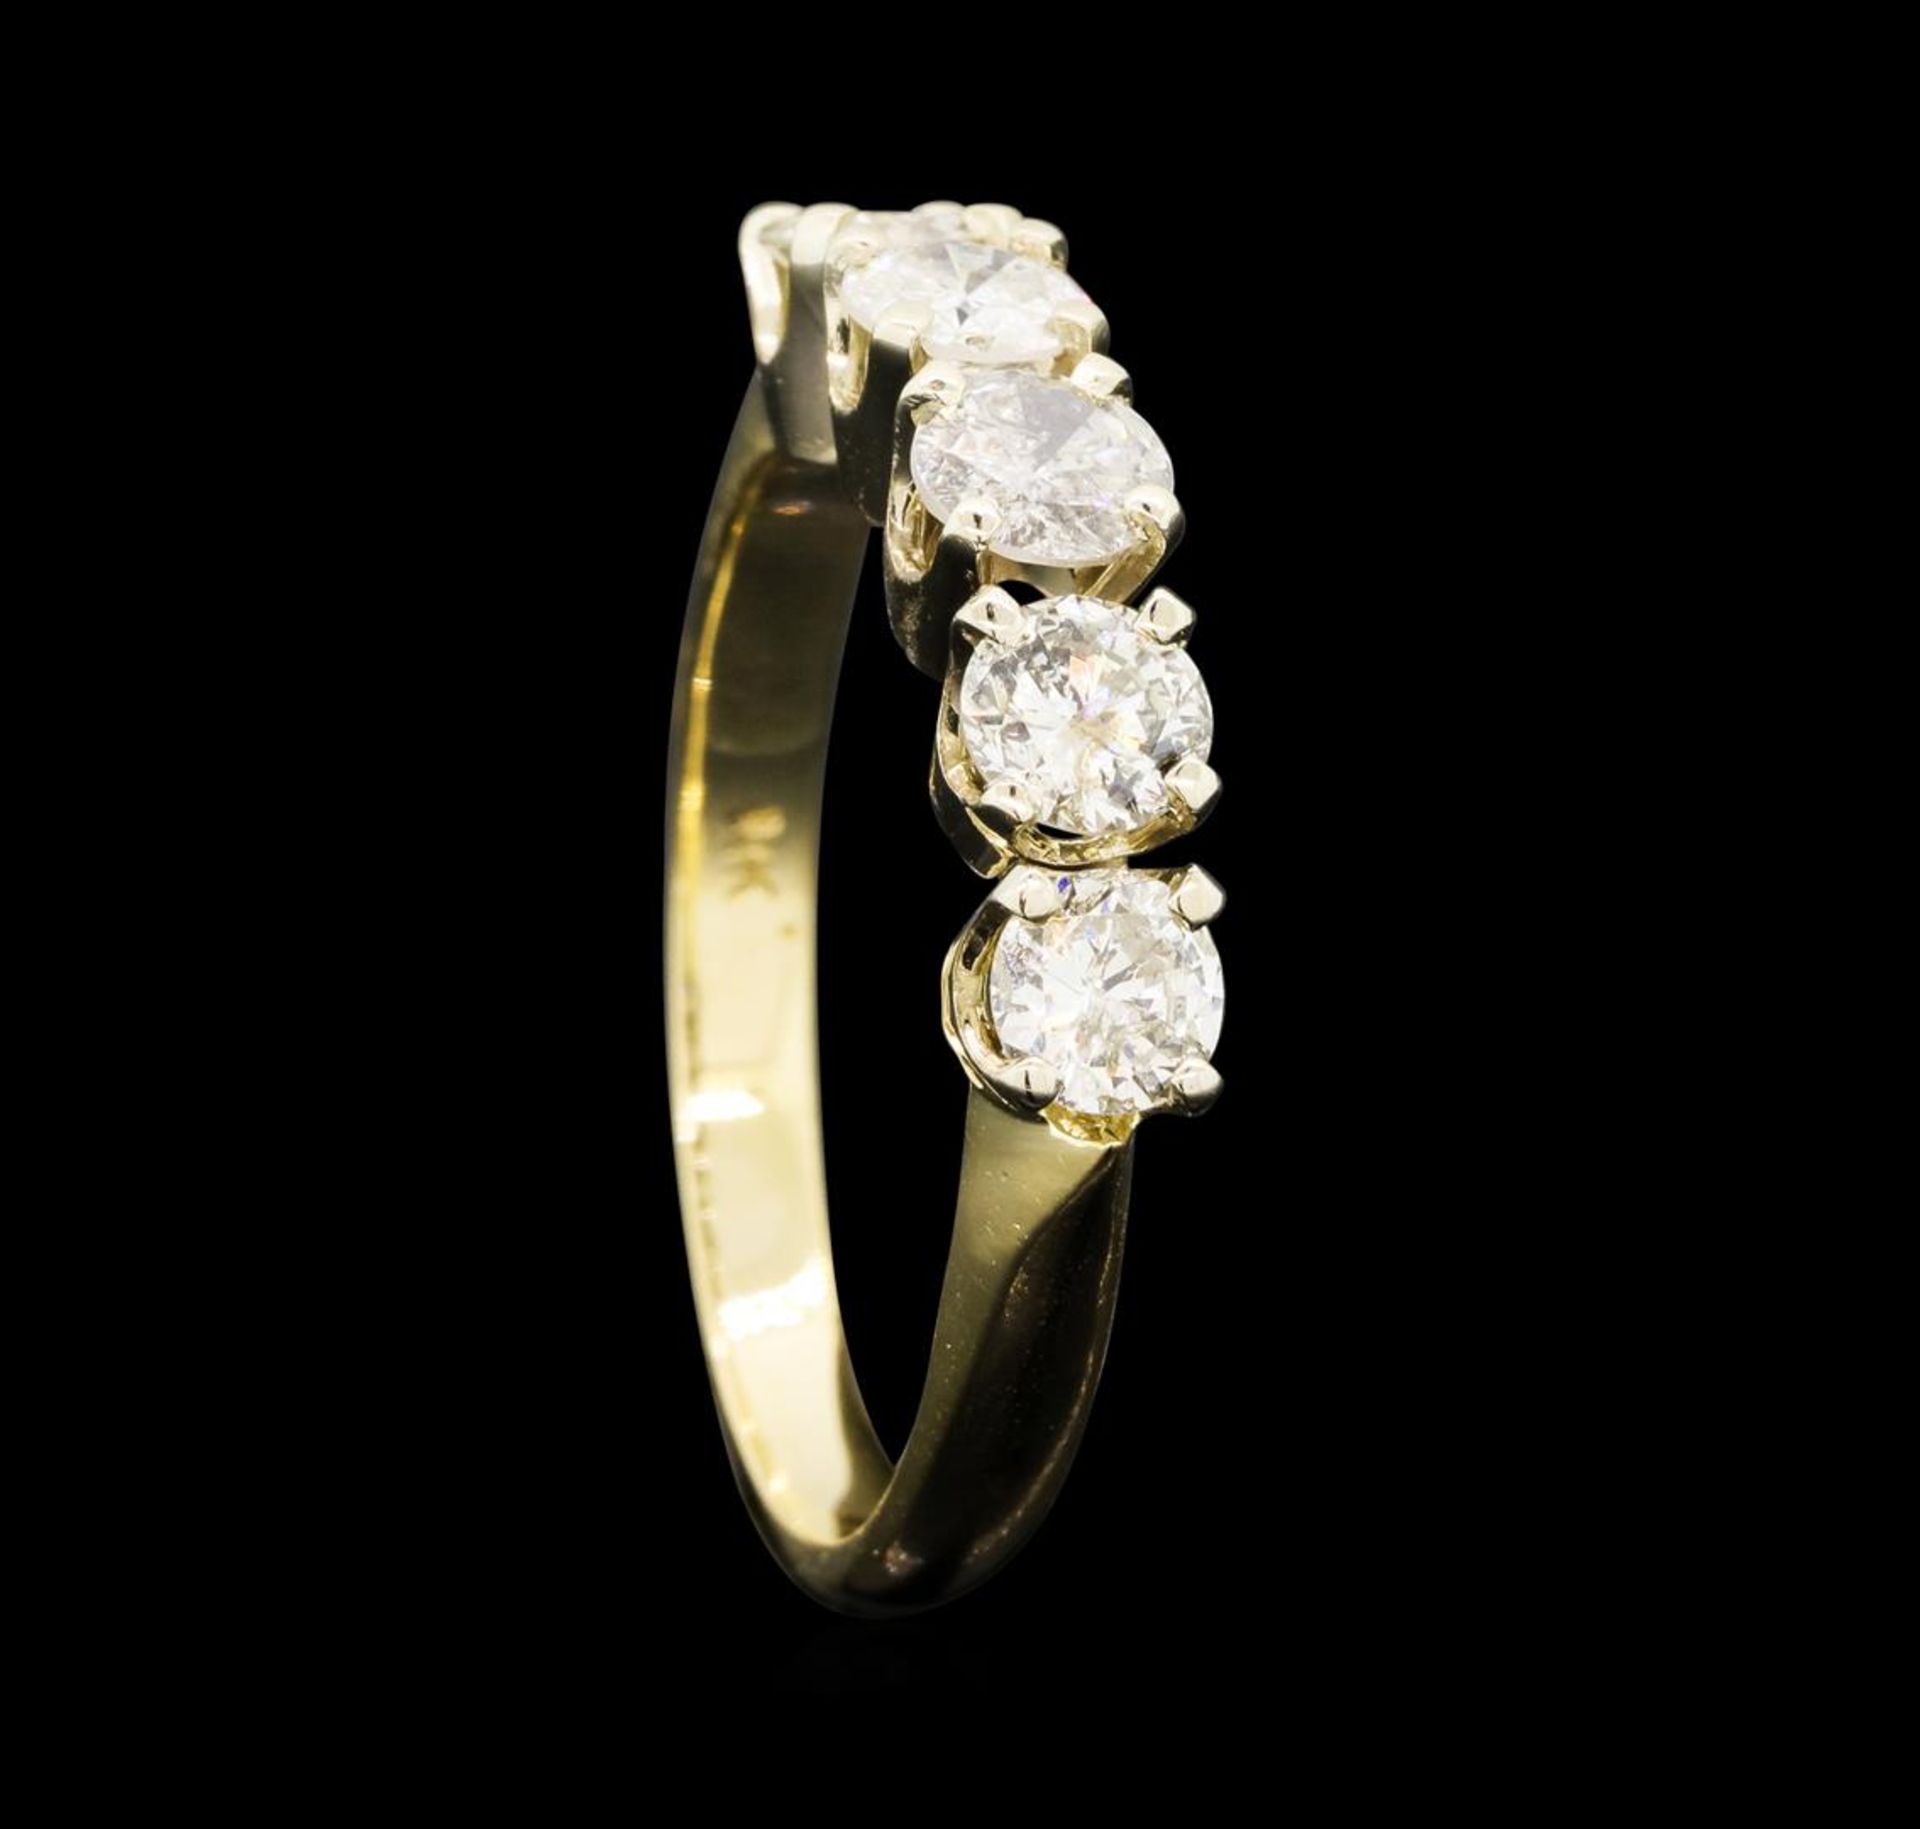 0.90 ctw Diamond Ring - 14KT Yellow Gold - Image 4 of 5